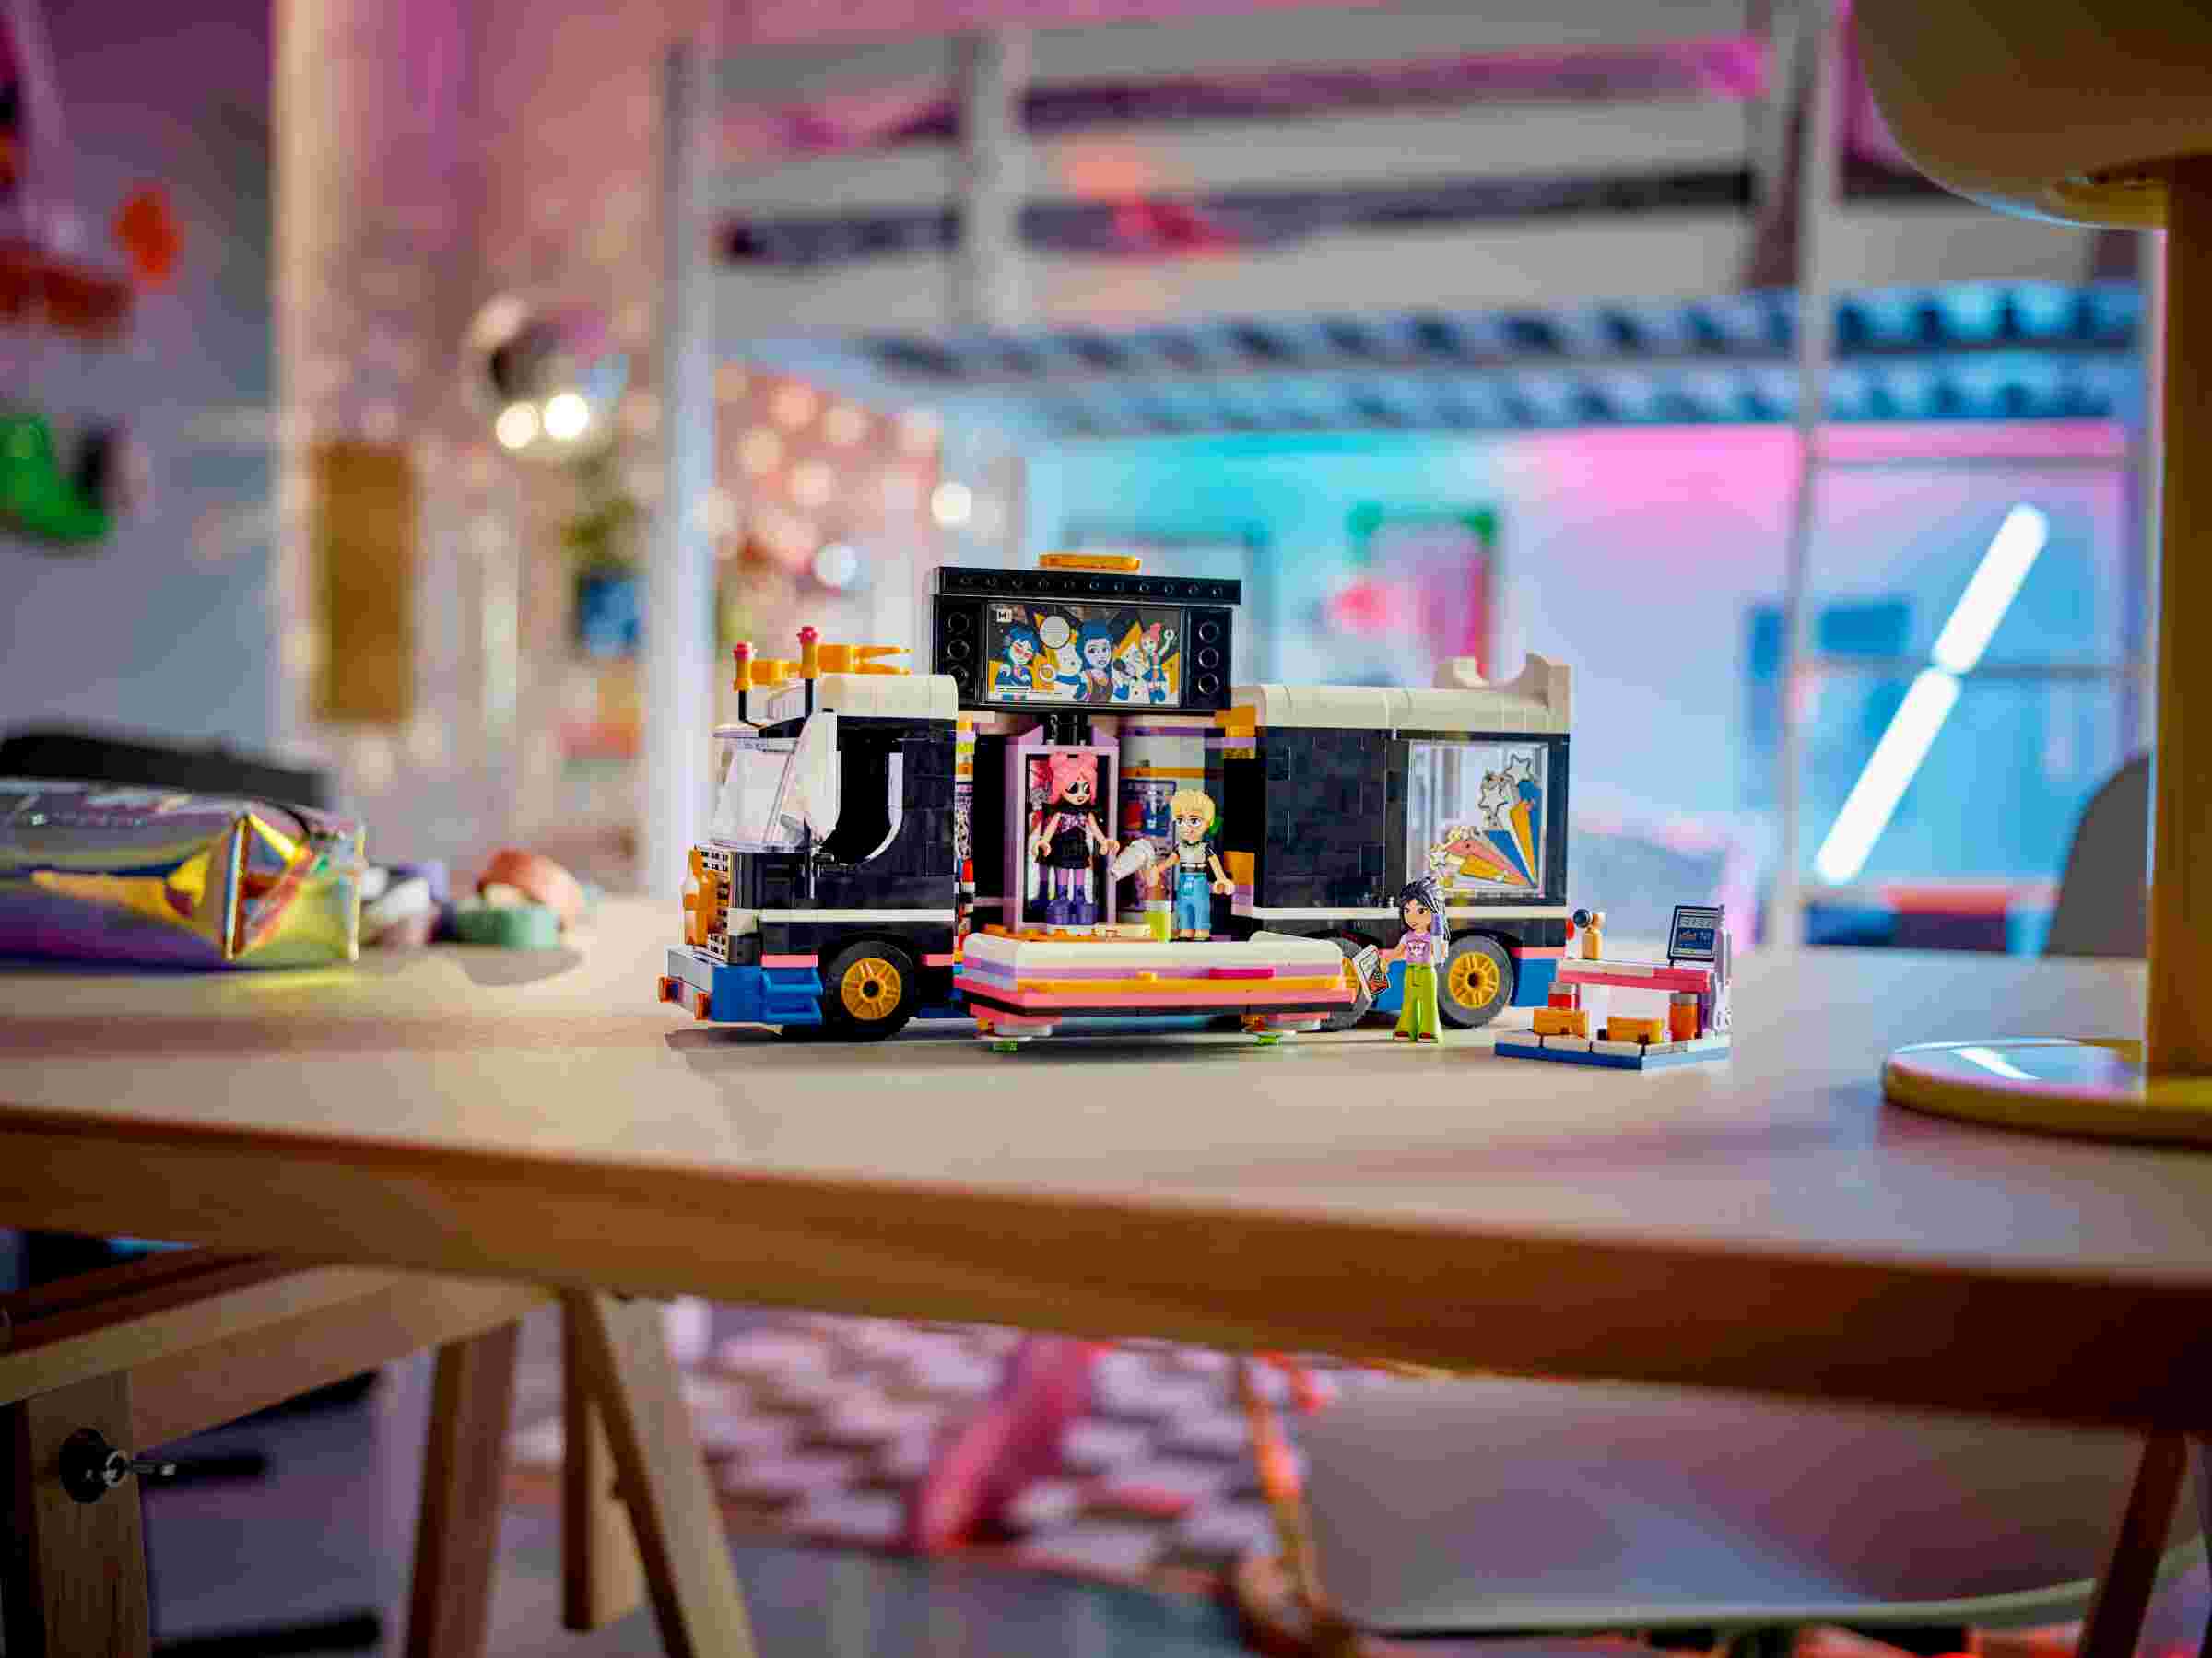 LEGO 42619 Friends Popstar-Tourbus, 4 Spielfiguren, Superstar Ley-La